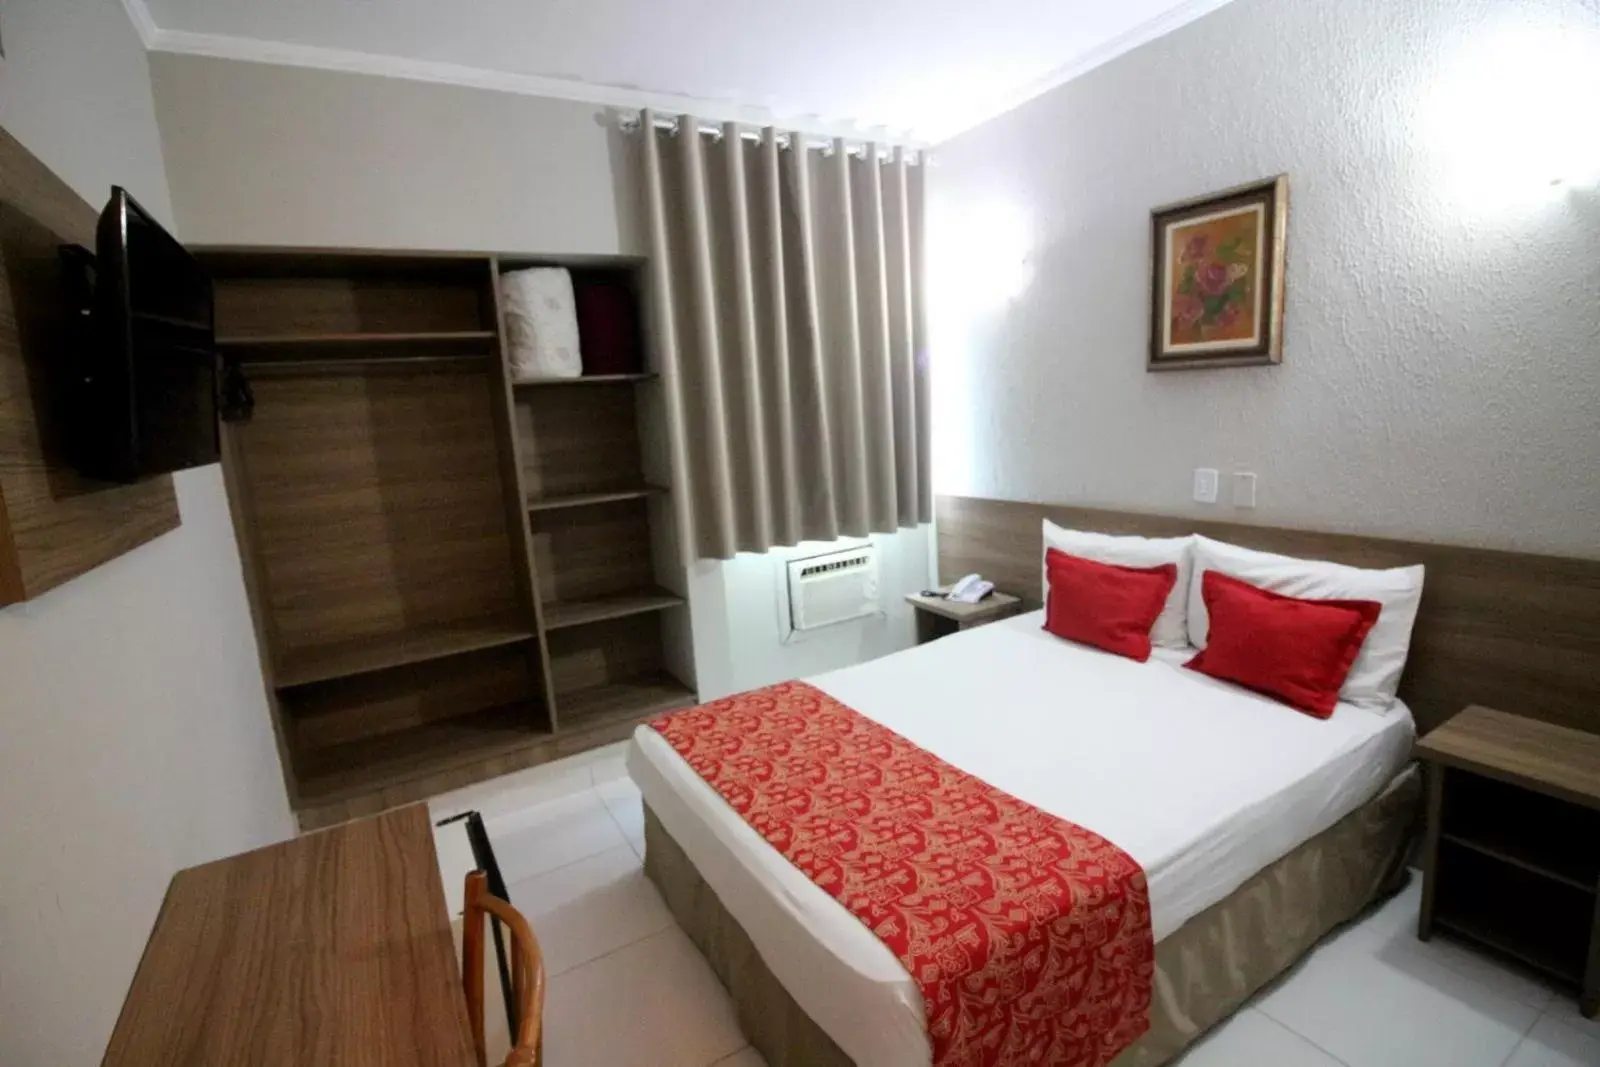 Photo of the whole room, Bed in Plaza Hotel São José dos Campos